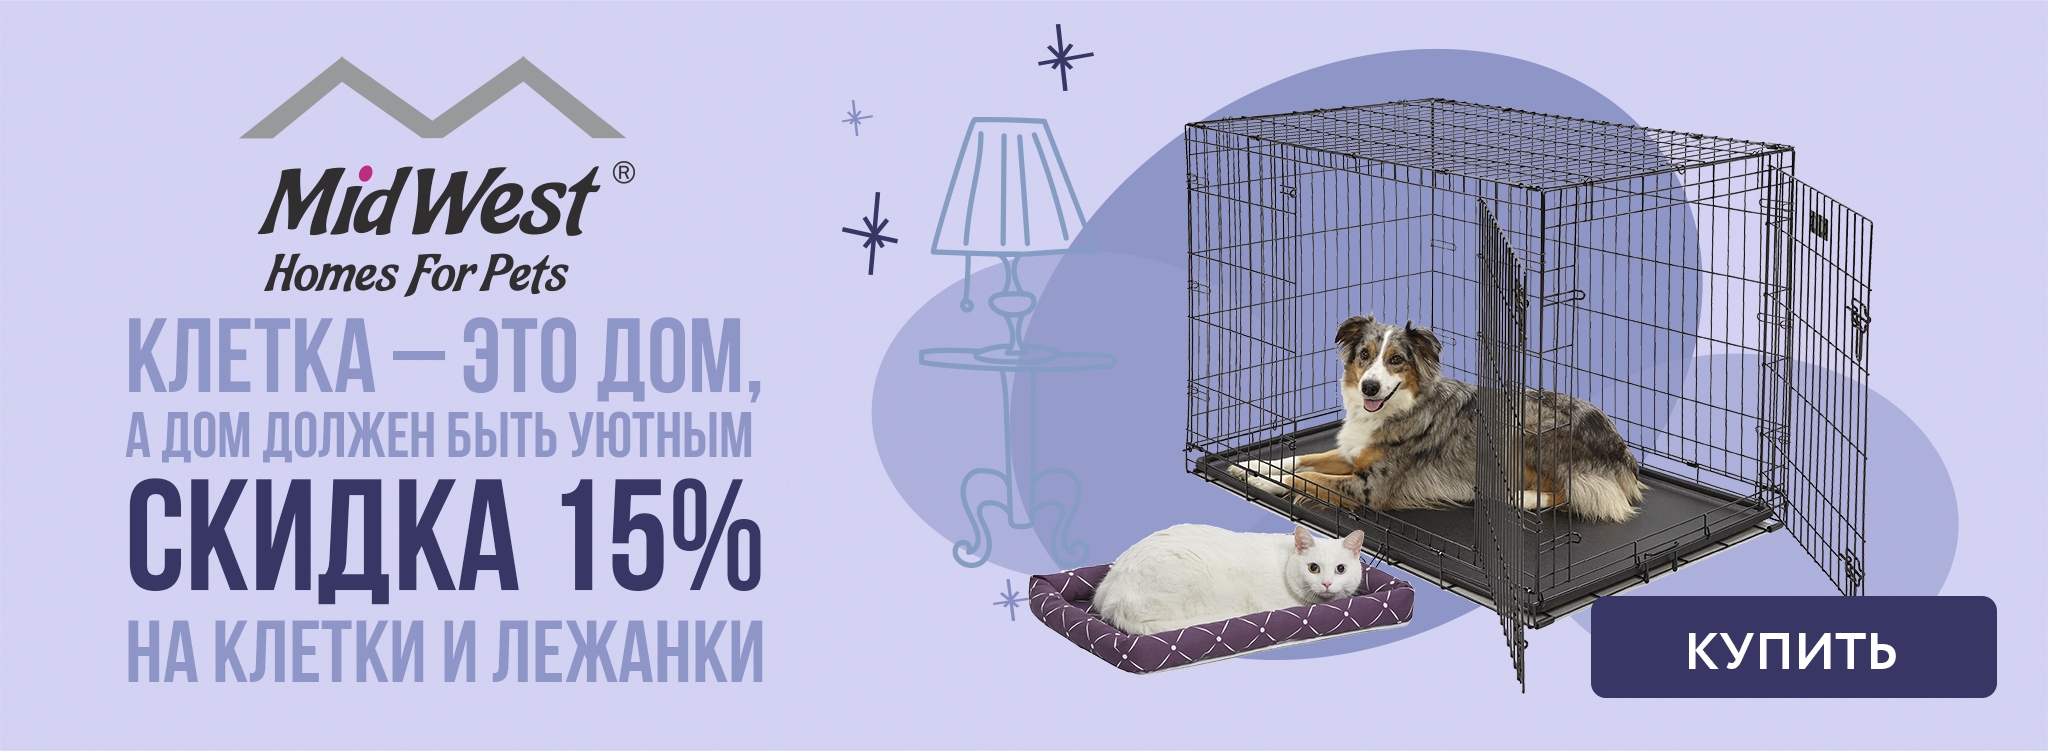 В  июле мы дарим скидку 15% на лежанки и клетки MidWest в Калининграде